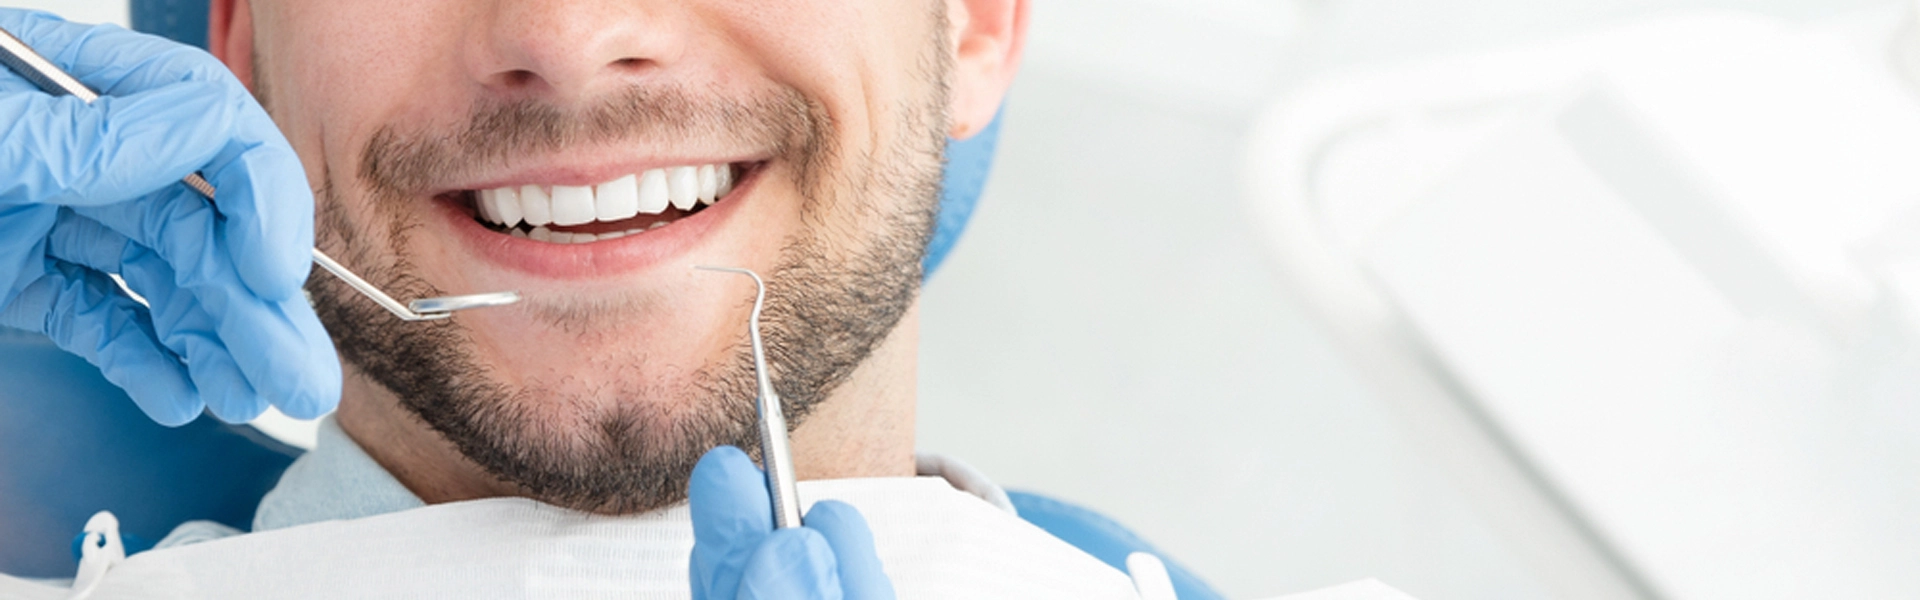 Genral Dentistry | Dental treatment